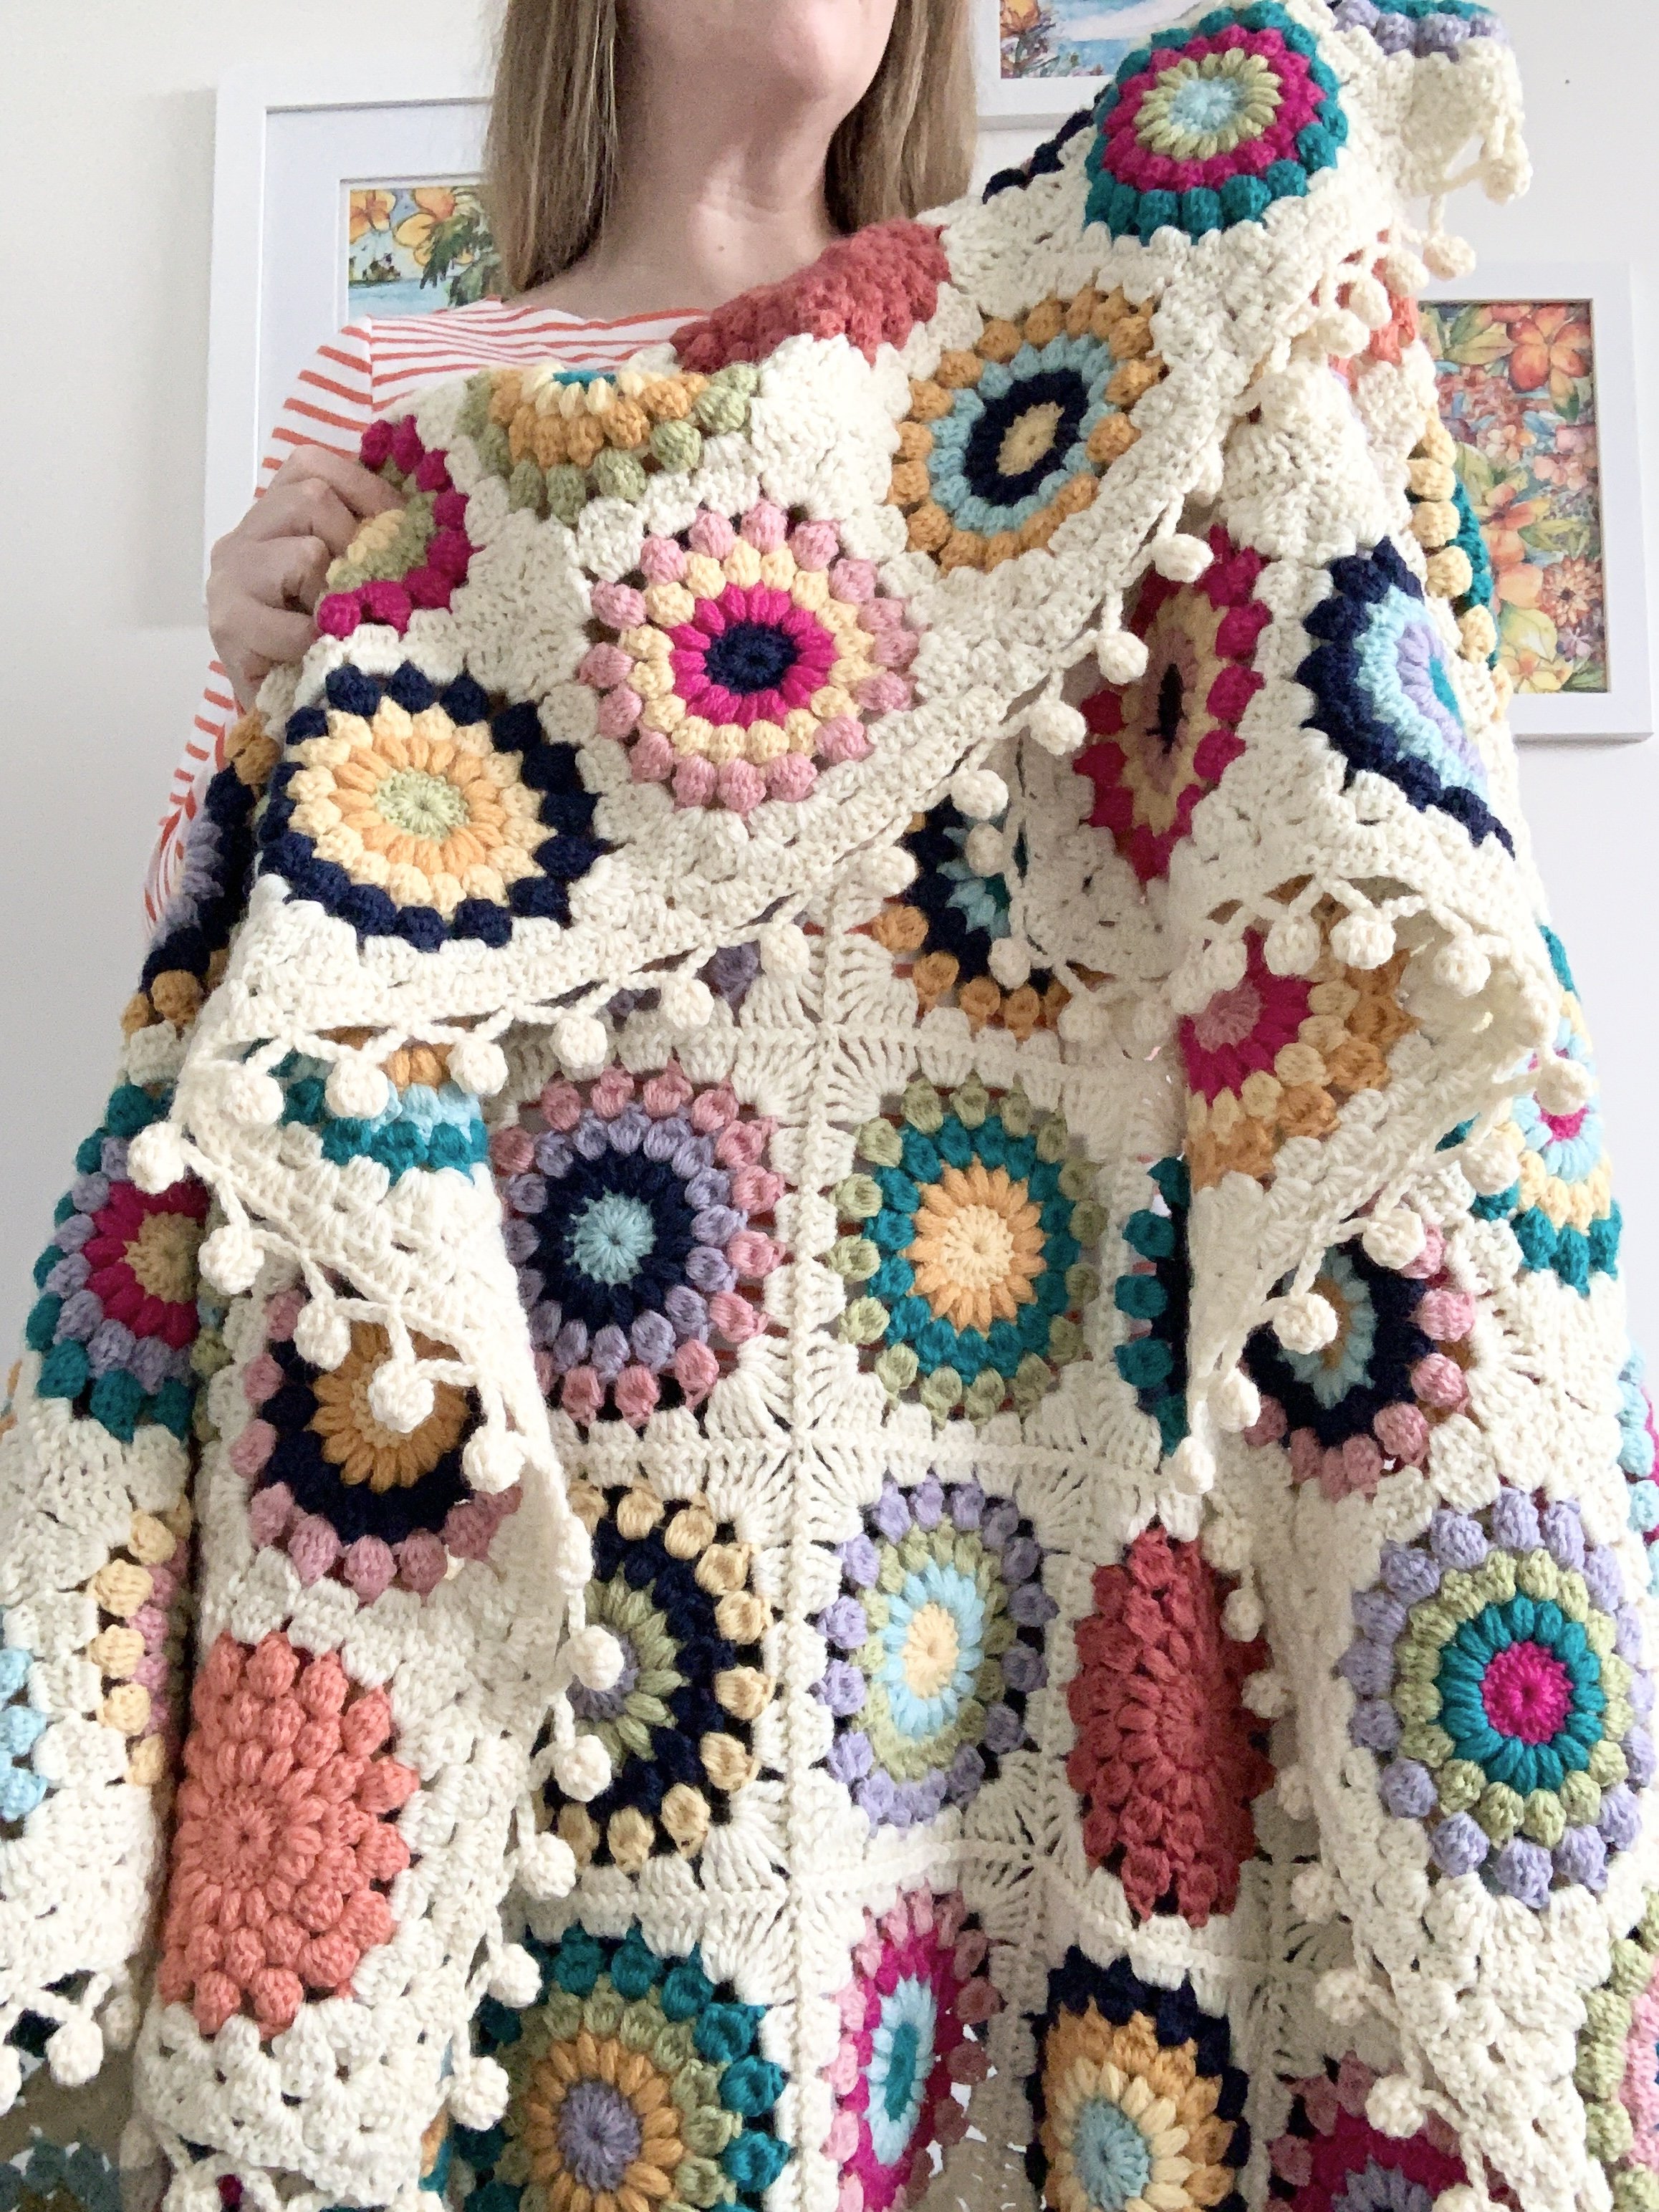 Crochet Blanket - Where Did U Get That